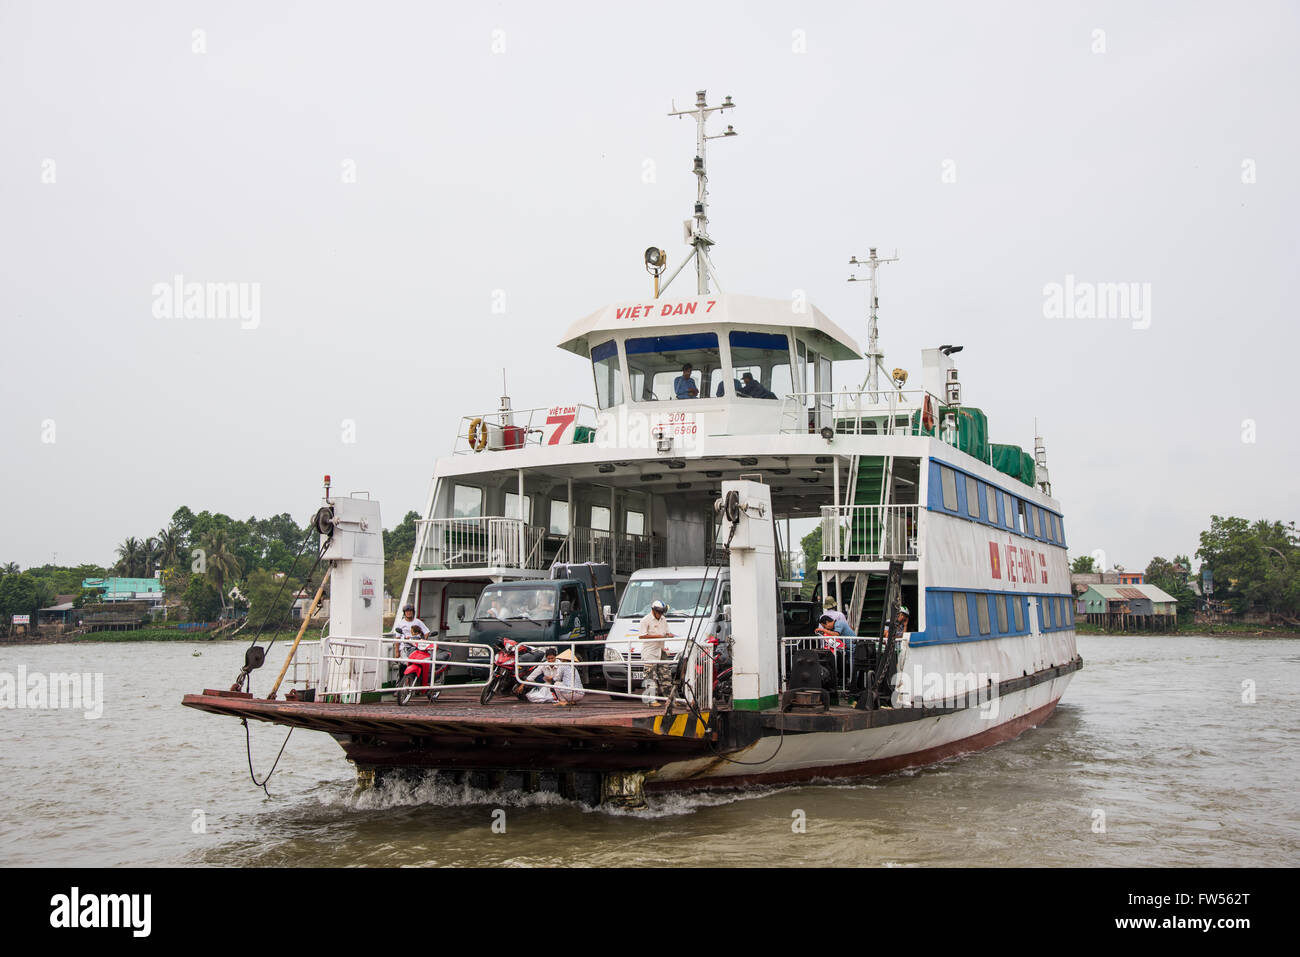 Viet-Dan River Fähren überqueren den Mekong bei einer Hoa in der Nähe von Long Xuyen im Mekong-Delta. Stockfoto